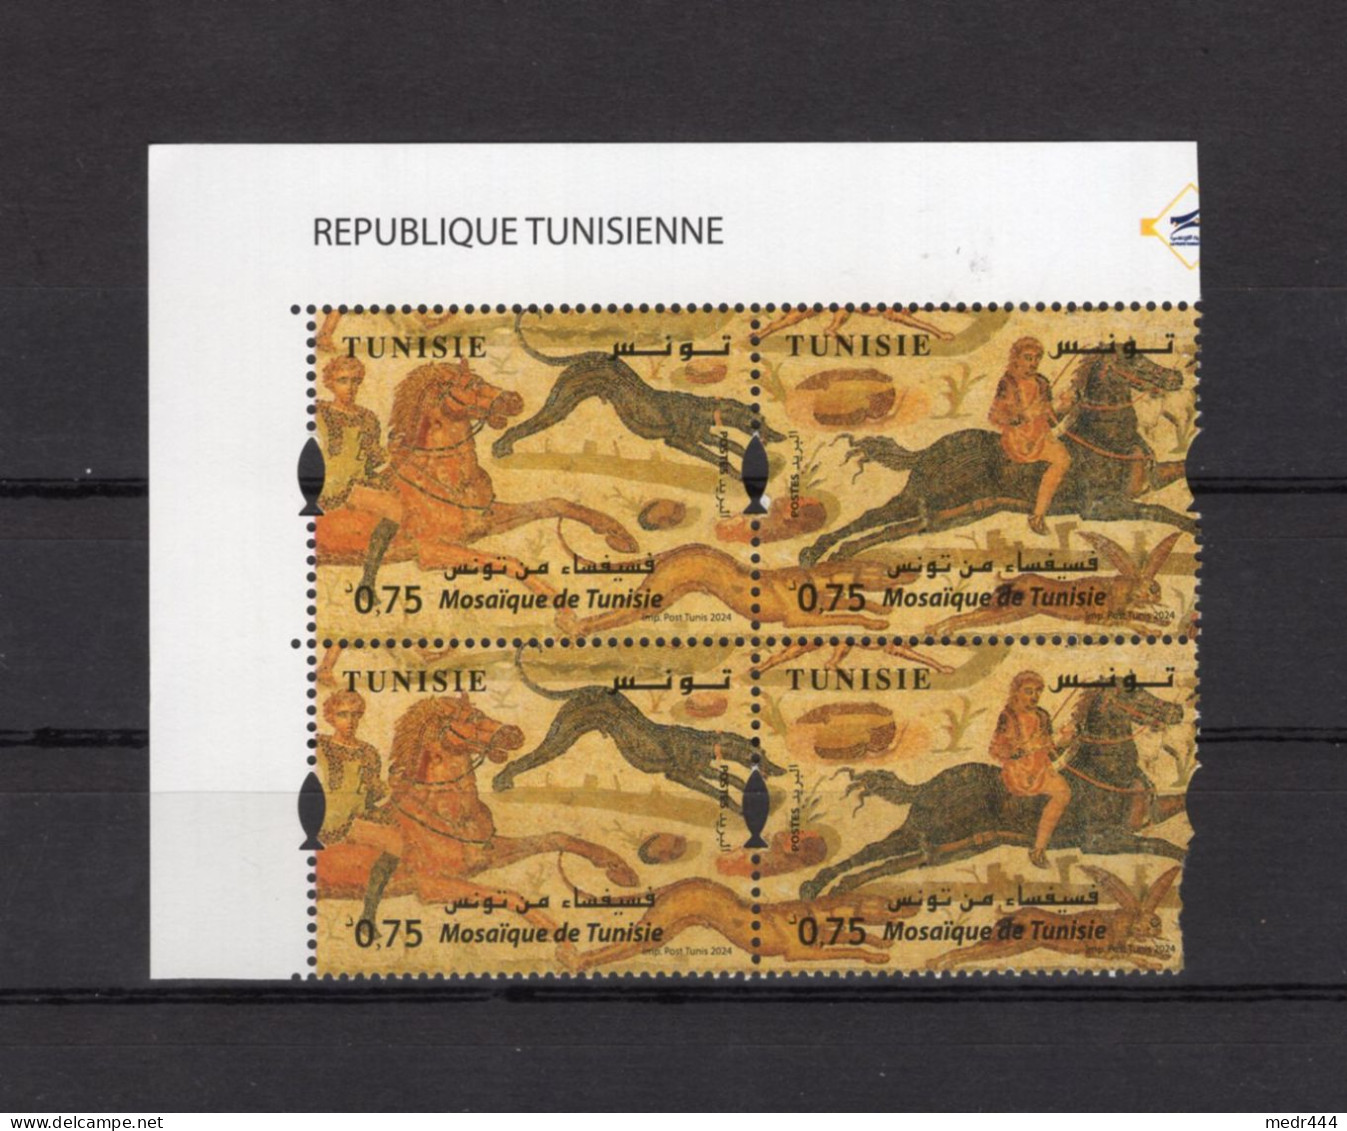 Tunisia/Tunisie 2024 - Mosaics From Tunisia/Mosaïque De Tunisie - Hunting Scene - 2 Strips Of 2 Stamps  - Superb*** - Tunesië (1956-...)